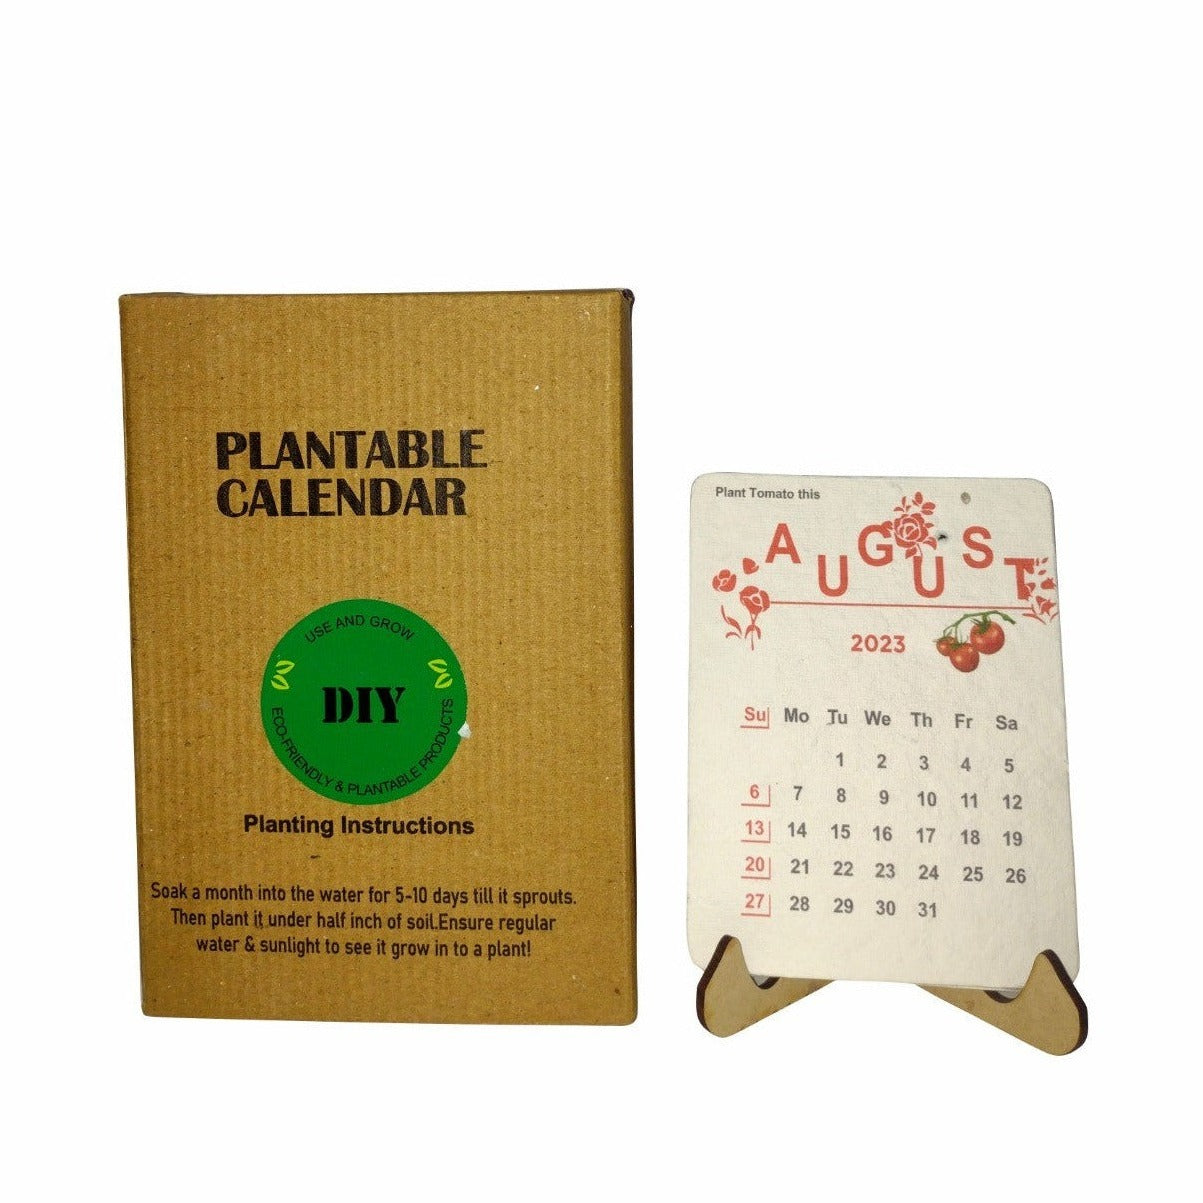 Plantable Seed Calendar 2023 - MOQ 100 pcs